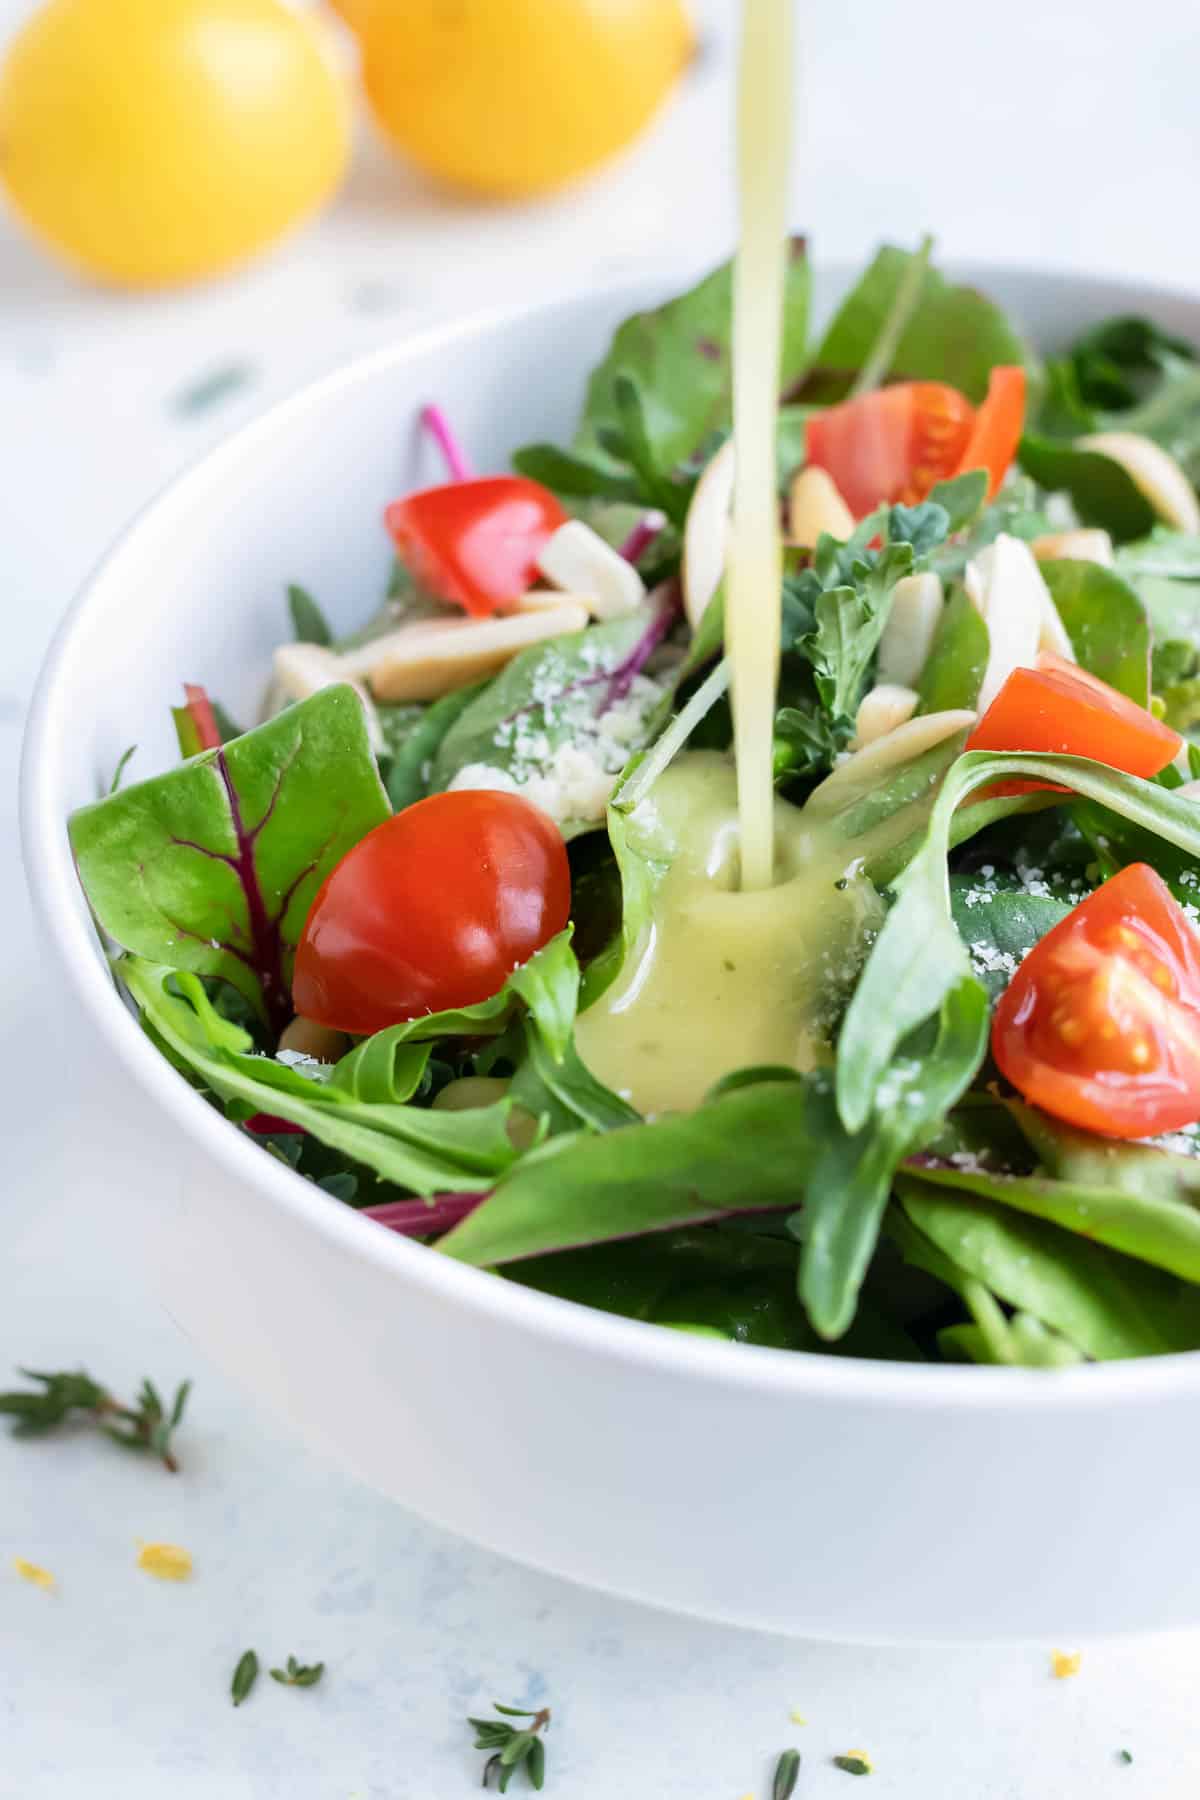 Lemon Vinaigrette is drizzled onto a healthy green salad.